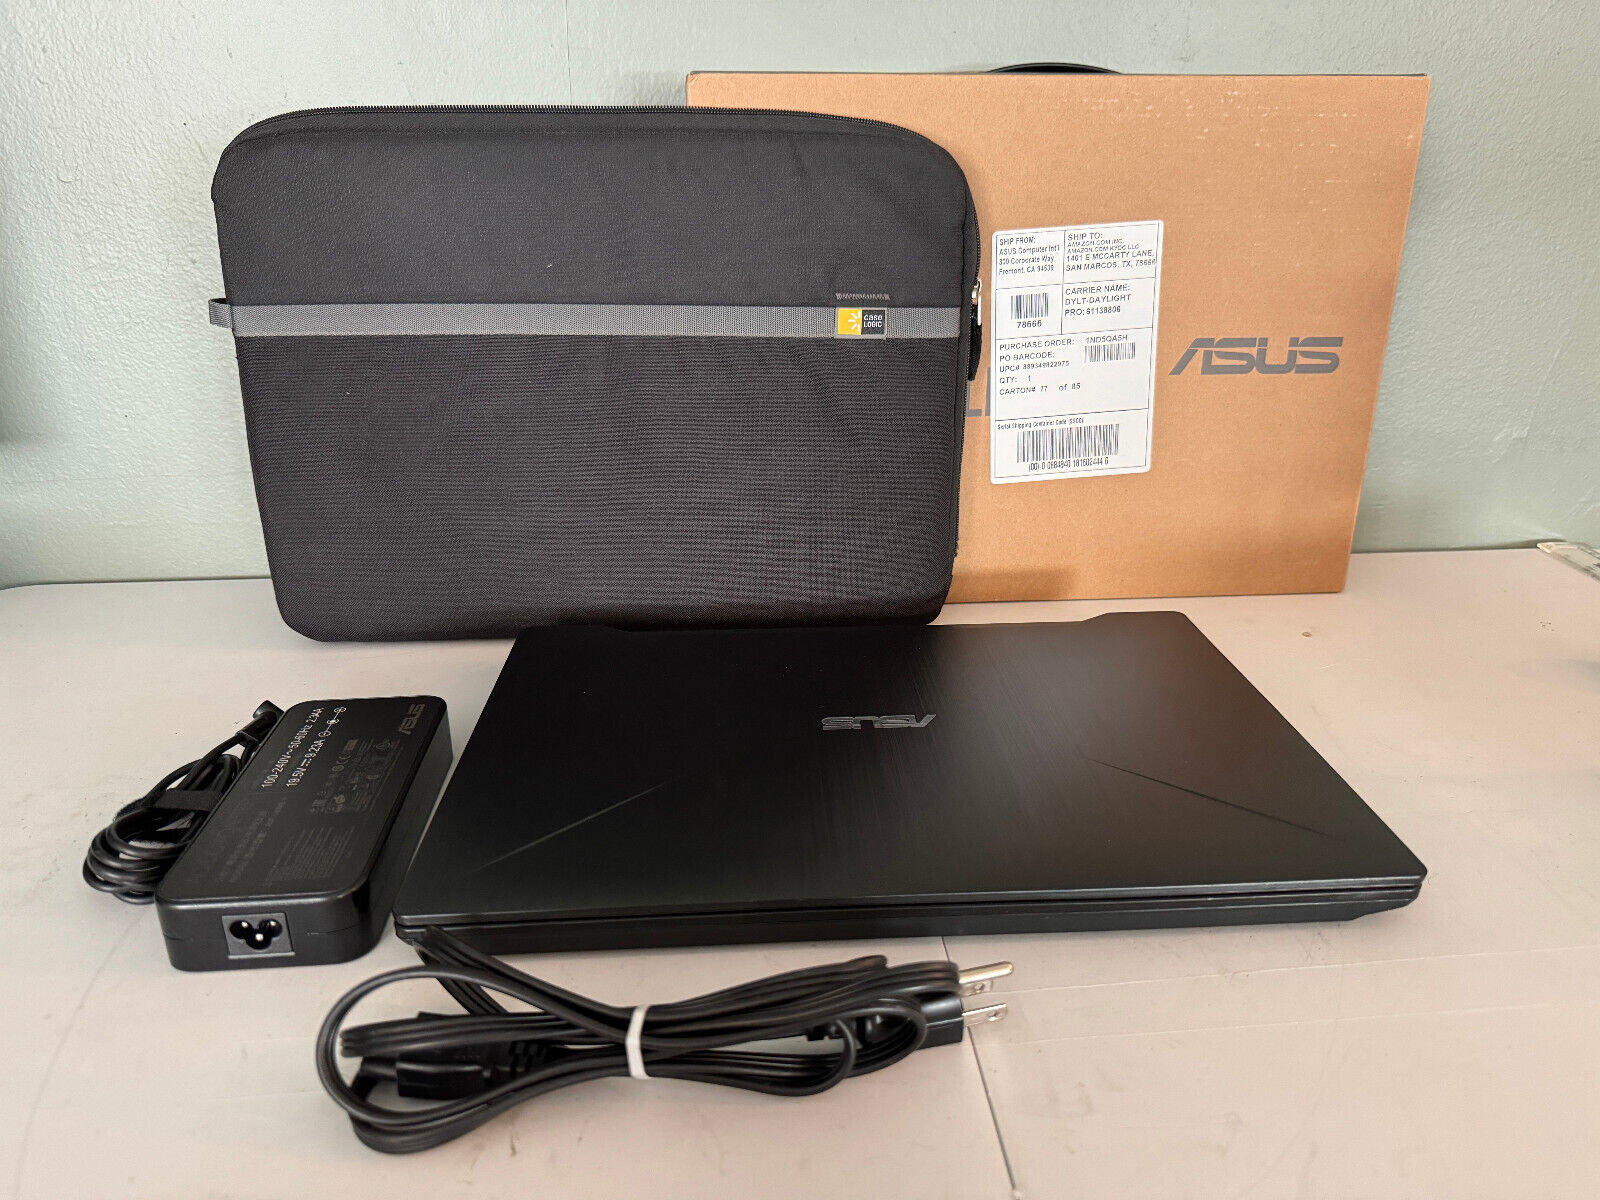 ASUS FX503VM 15.6” Full HD Gaming Laptop, Intel Core i7-7700HQ, GTX 1060 3GB